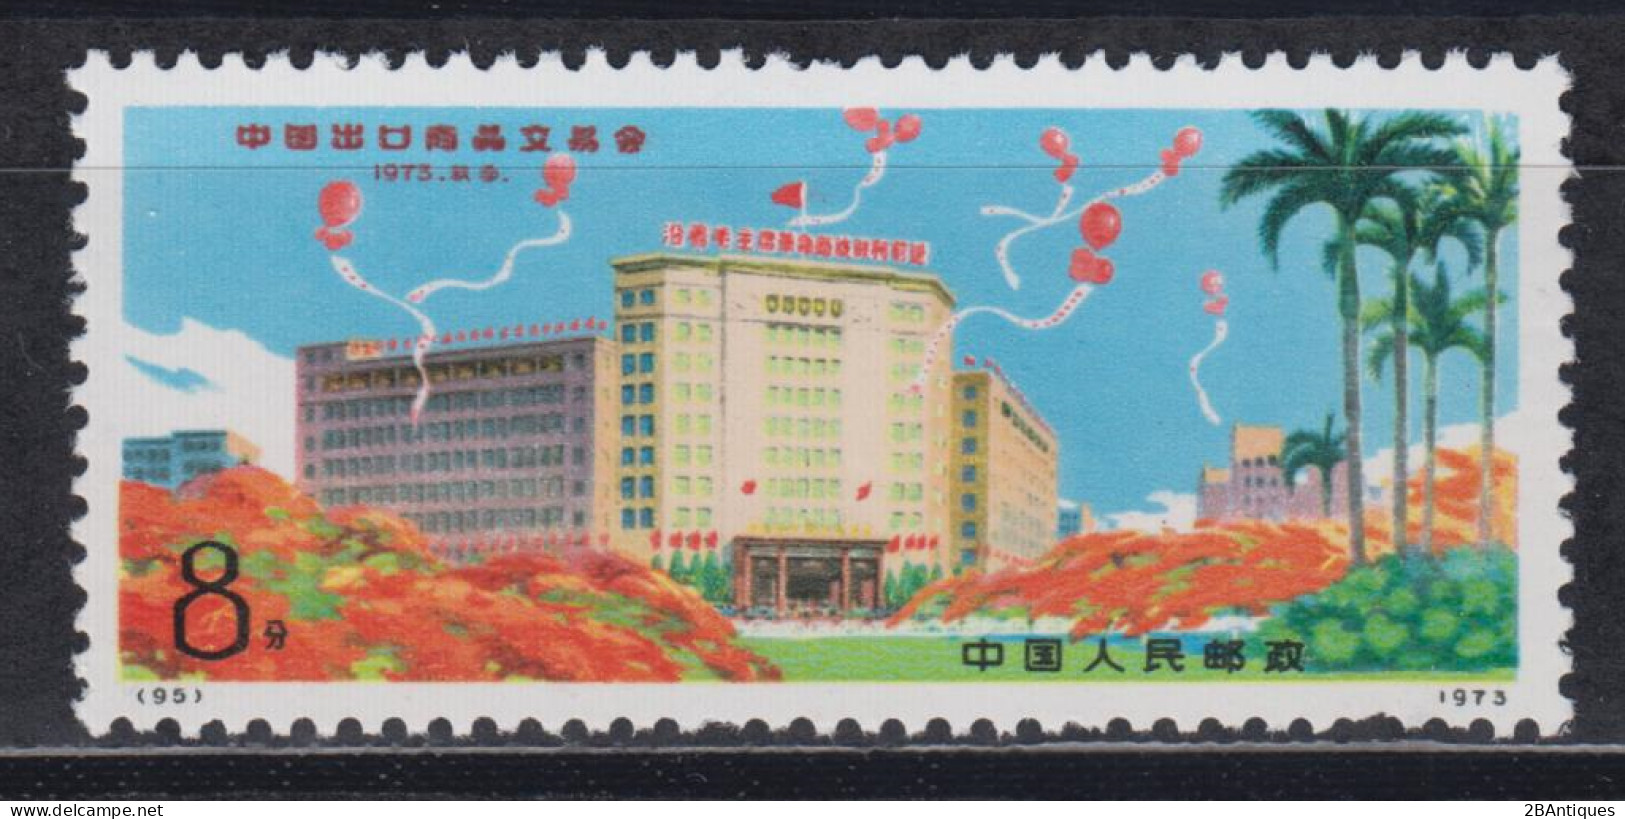 PR CHINA 1973 - Chinese Exports Fair, Canton MNH** OG XF - Ongebruikt